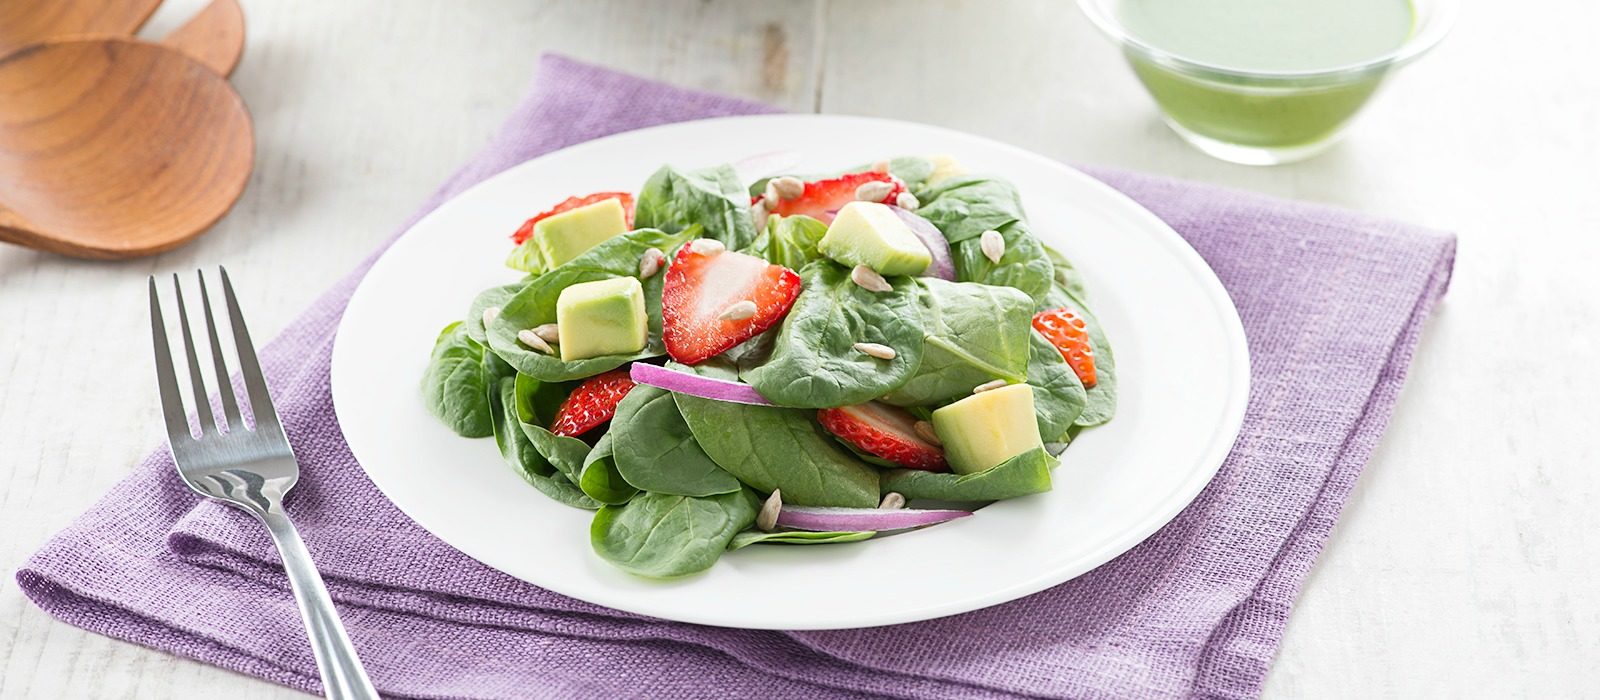 Strawberry Avocado Salad with Green Goddess Dressing